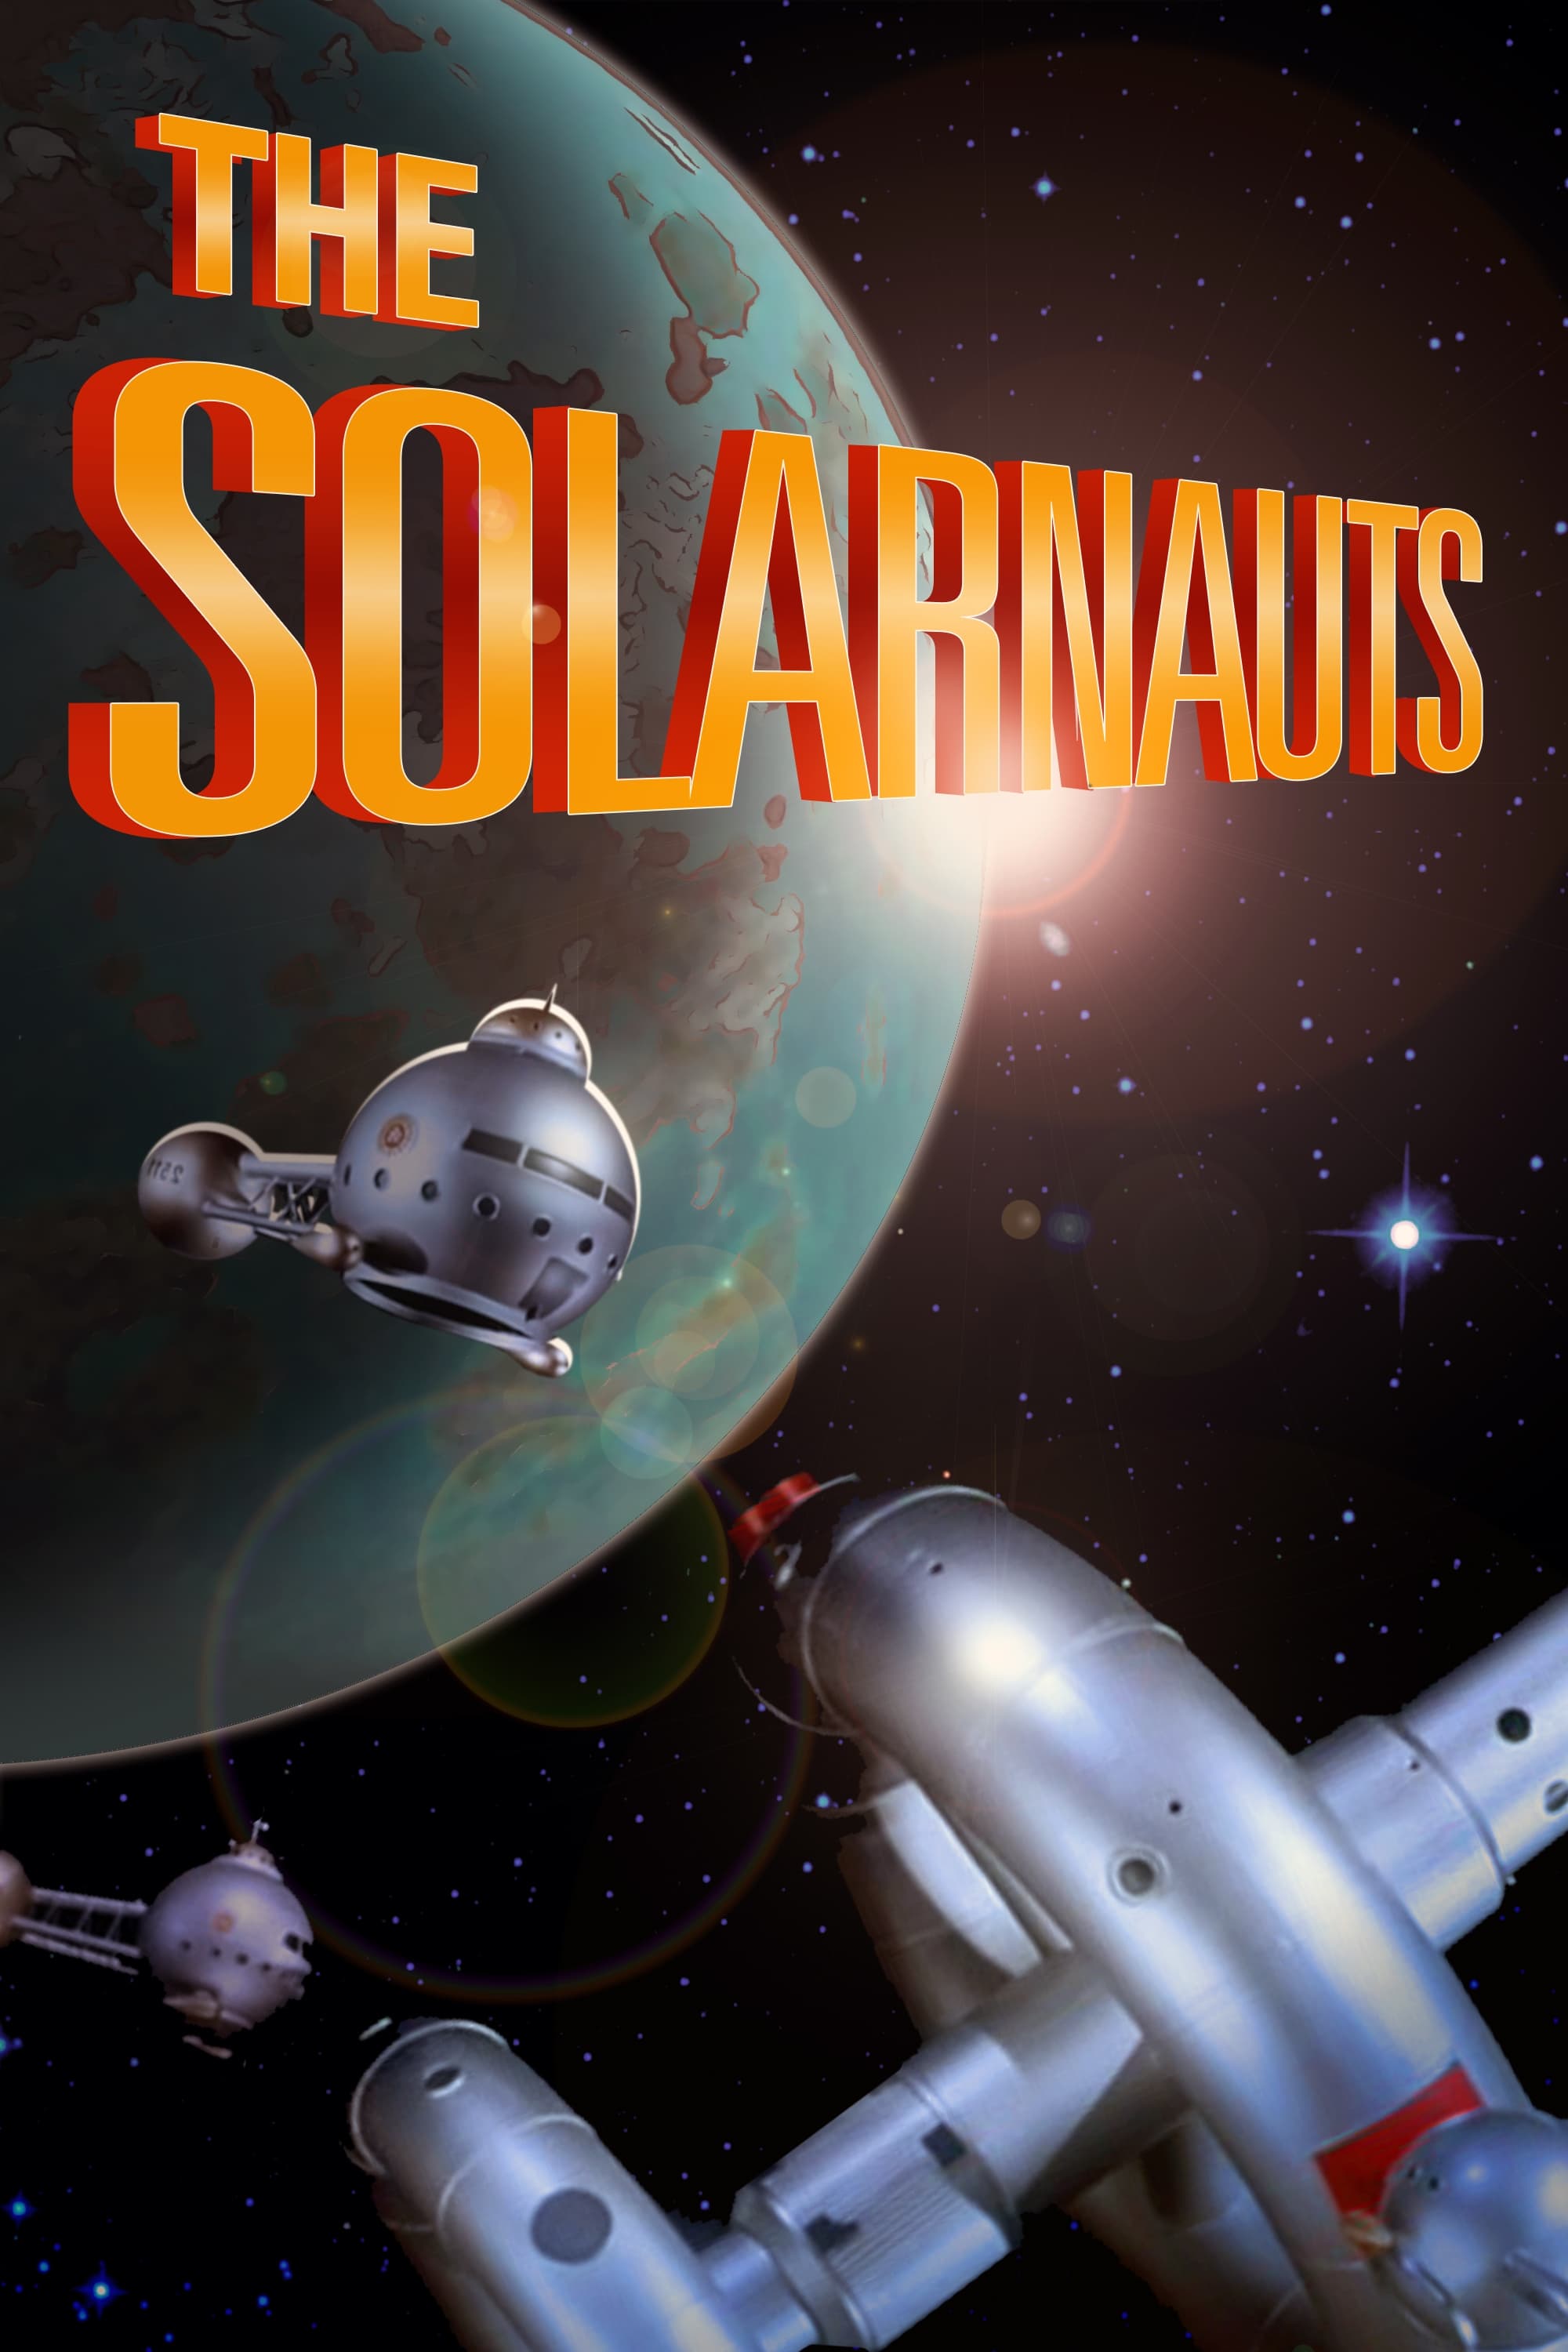 The Solarnauts (1967)